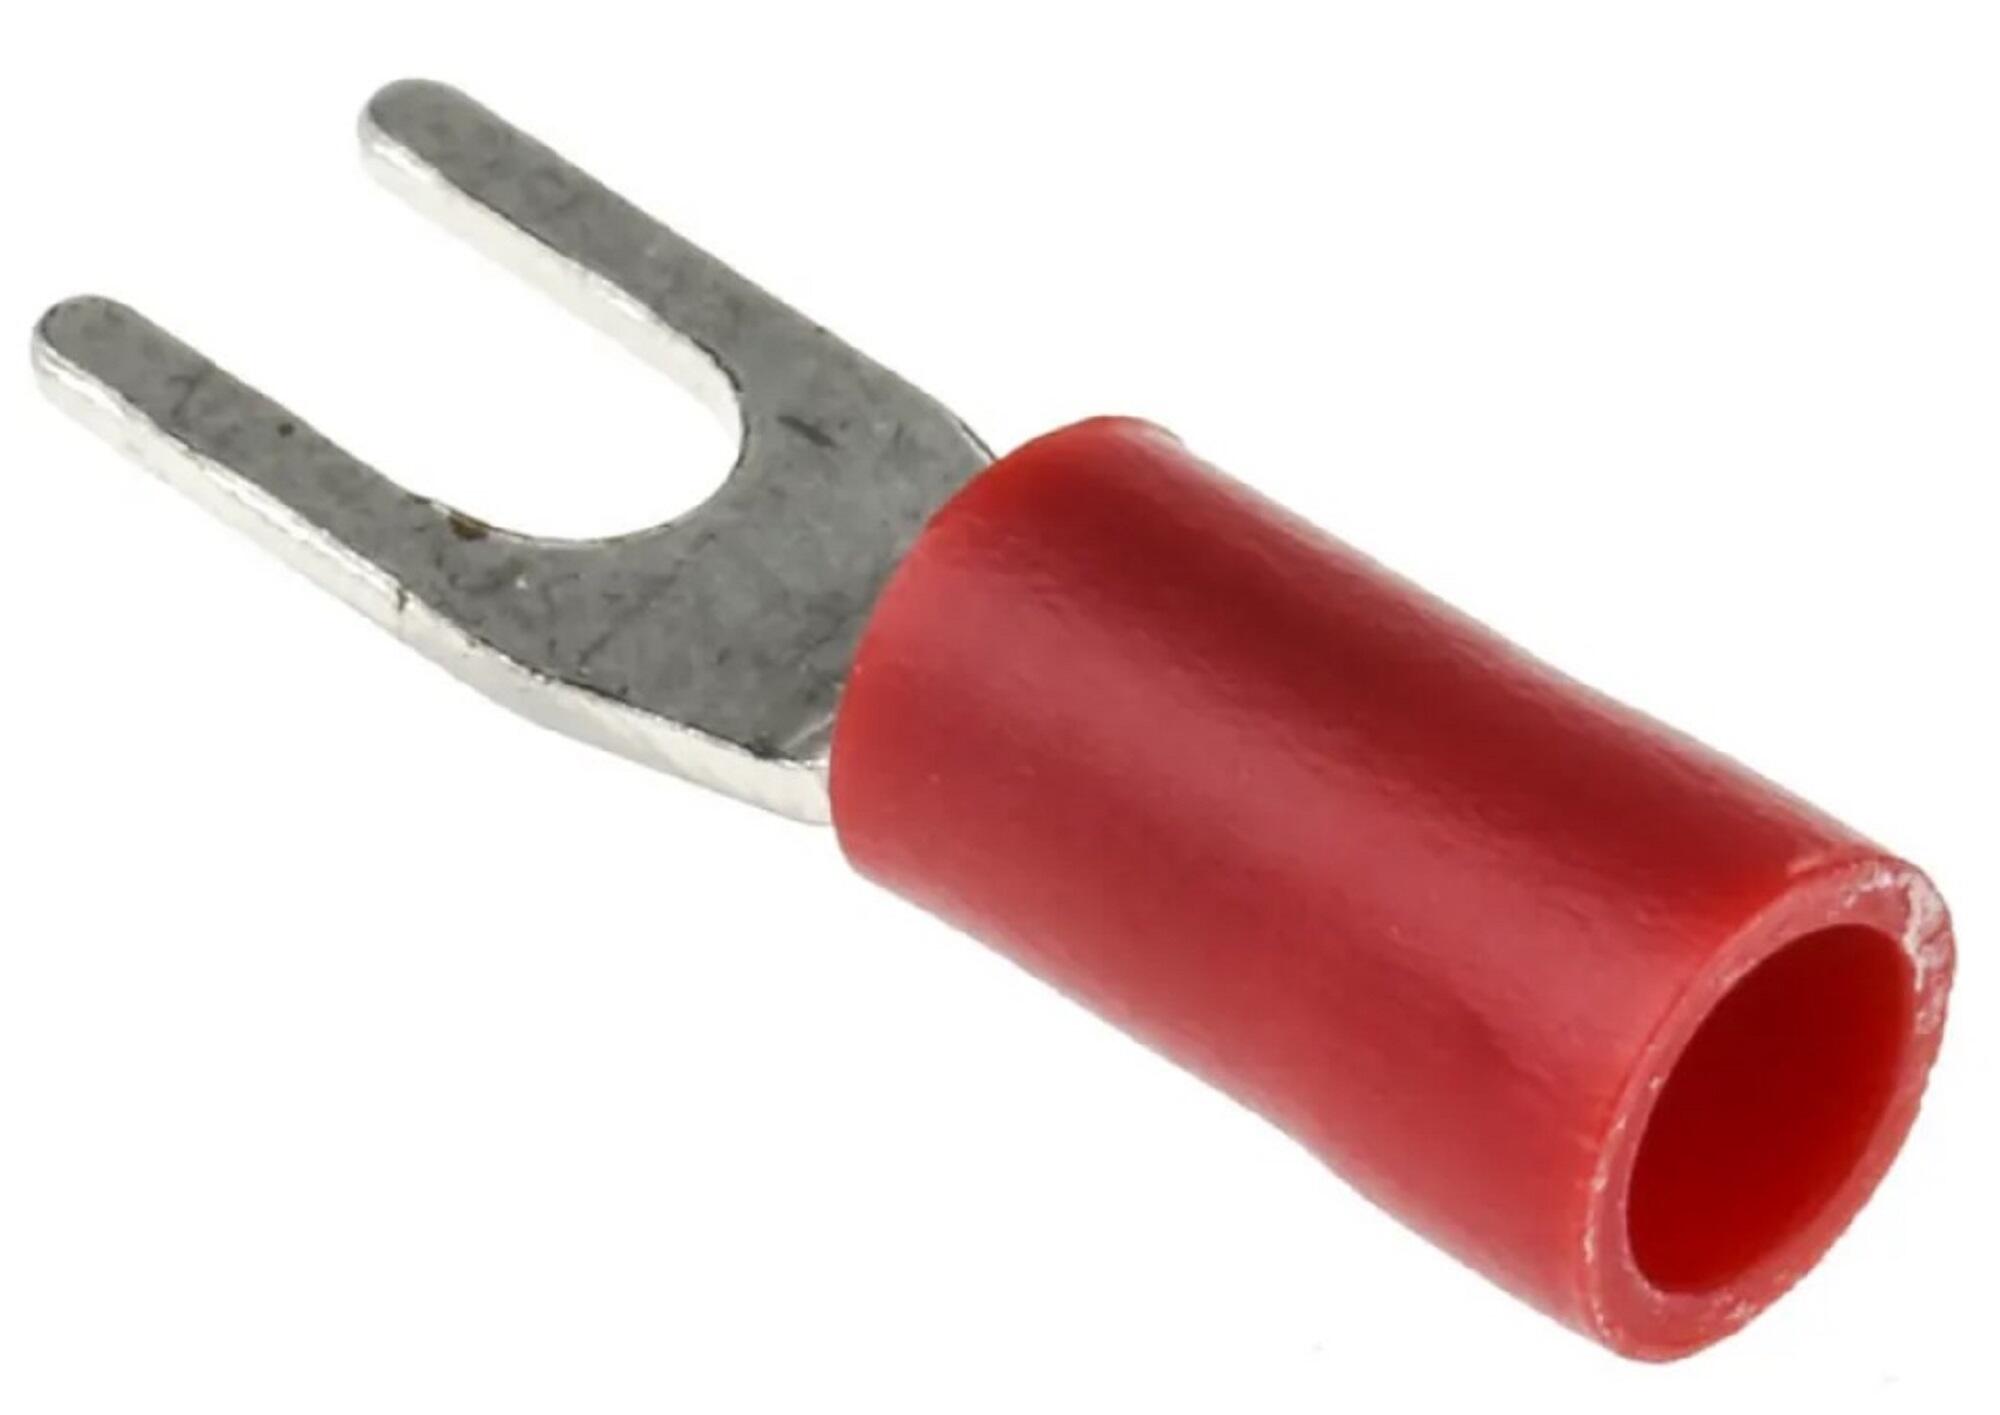 Terminal de cable en horquilla rojo de 2.38x21x4.3x6.4 mm (altoxanchoxdiamxprof)